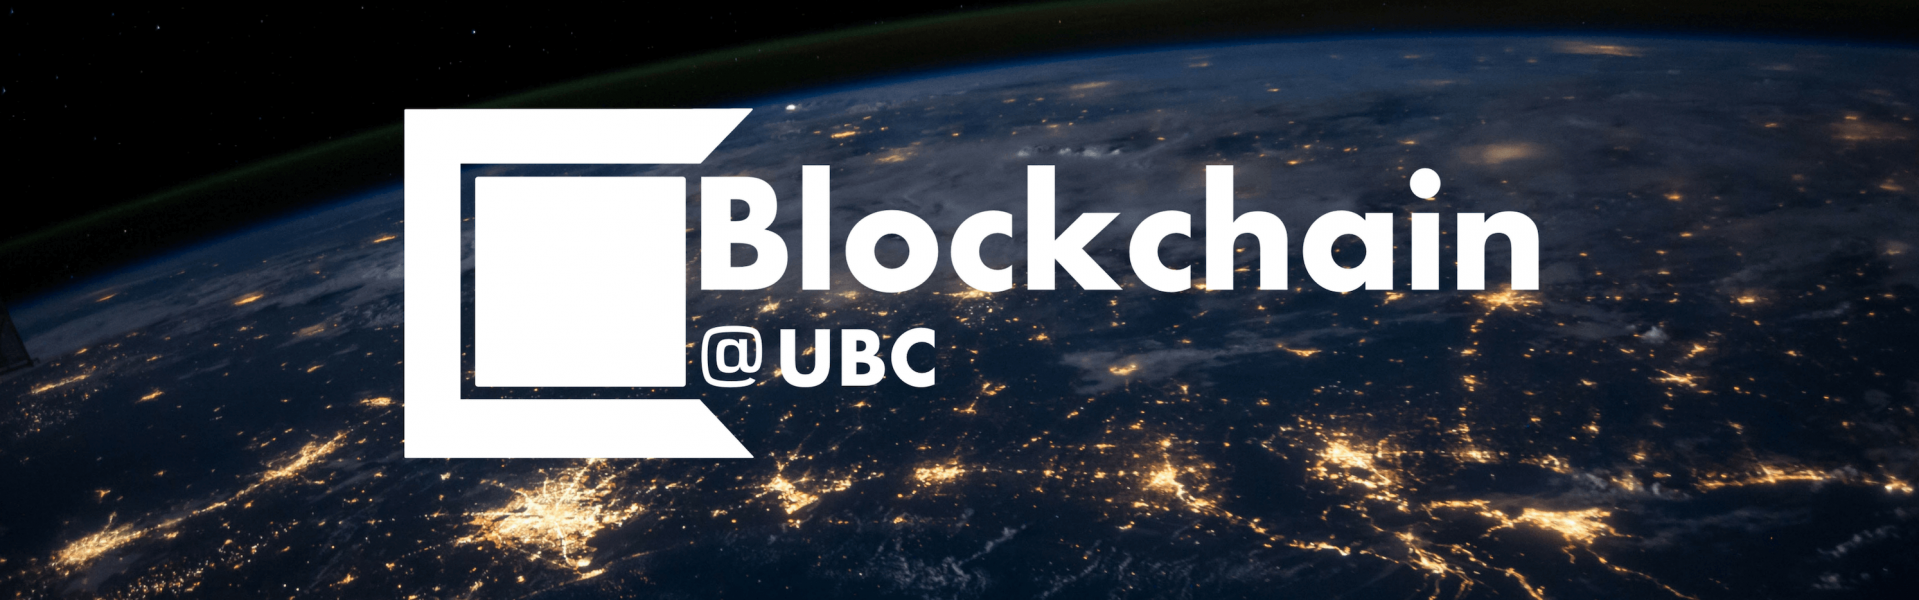 blockchain ubc